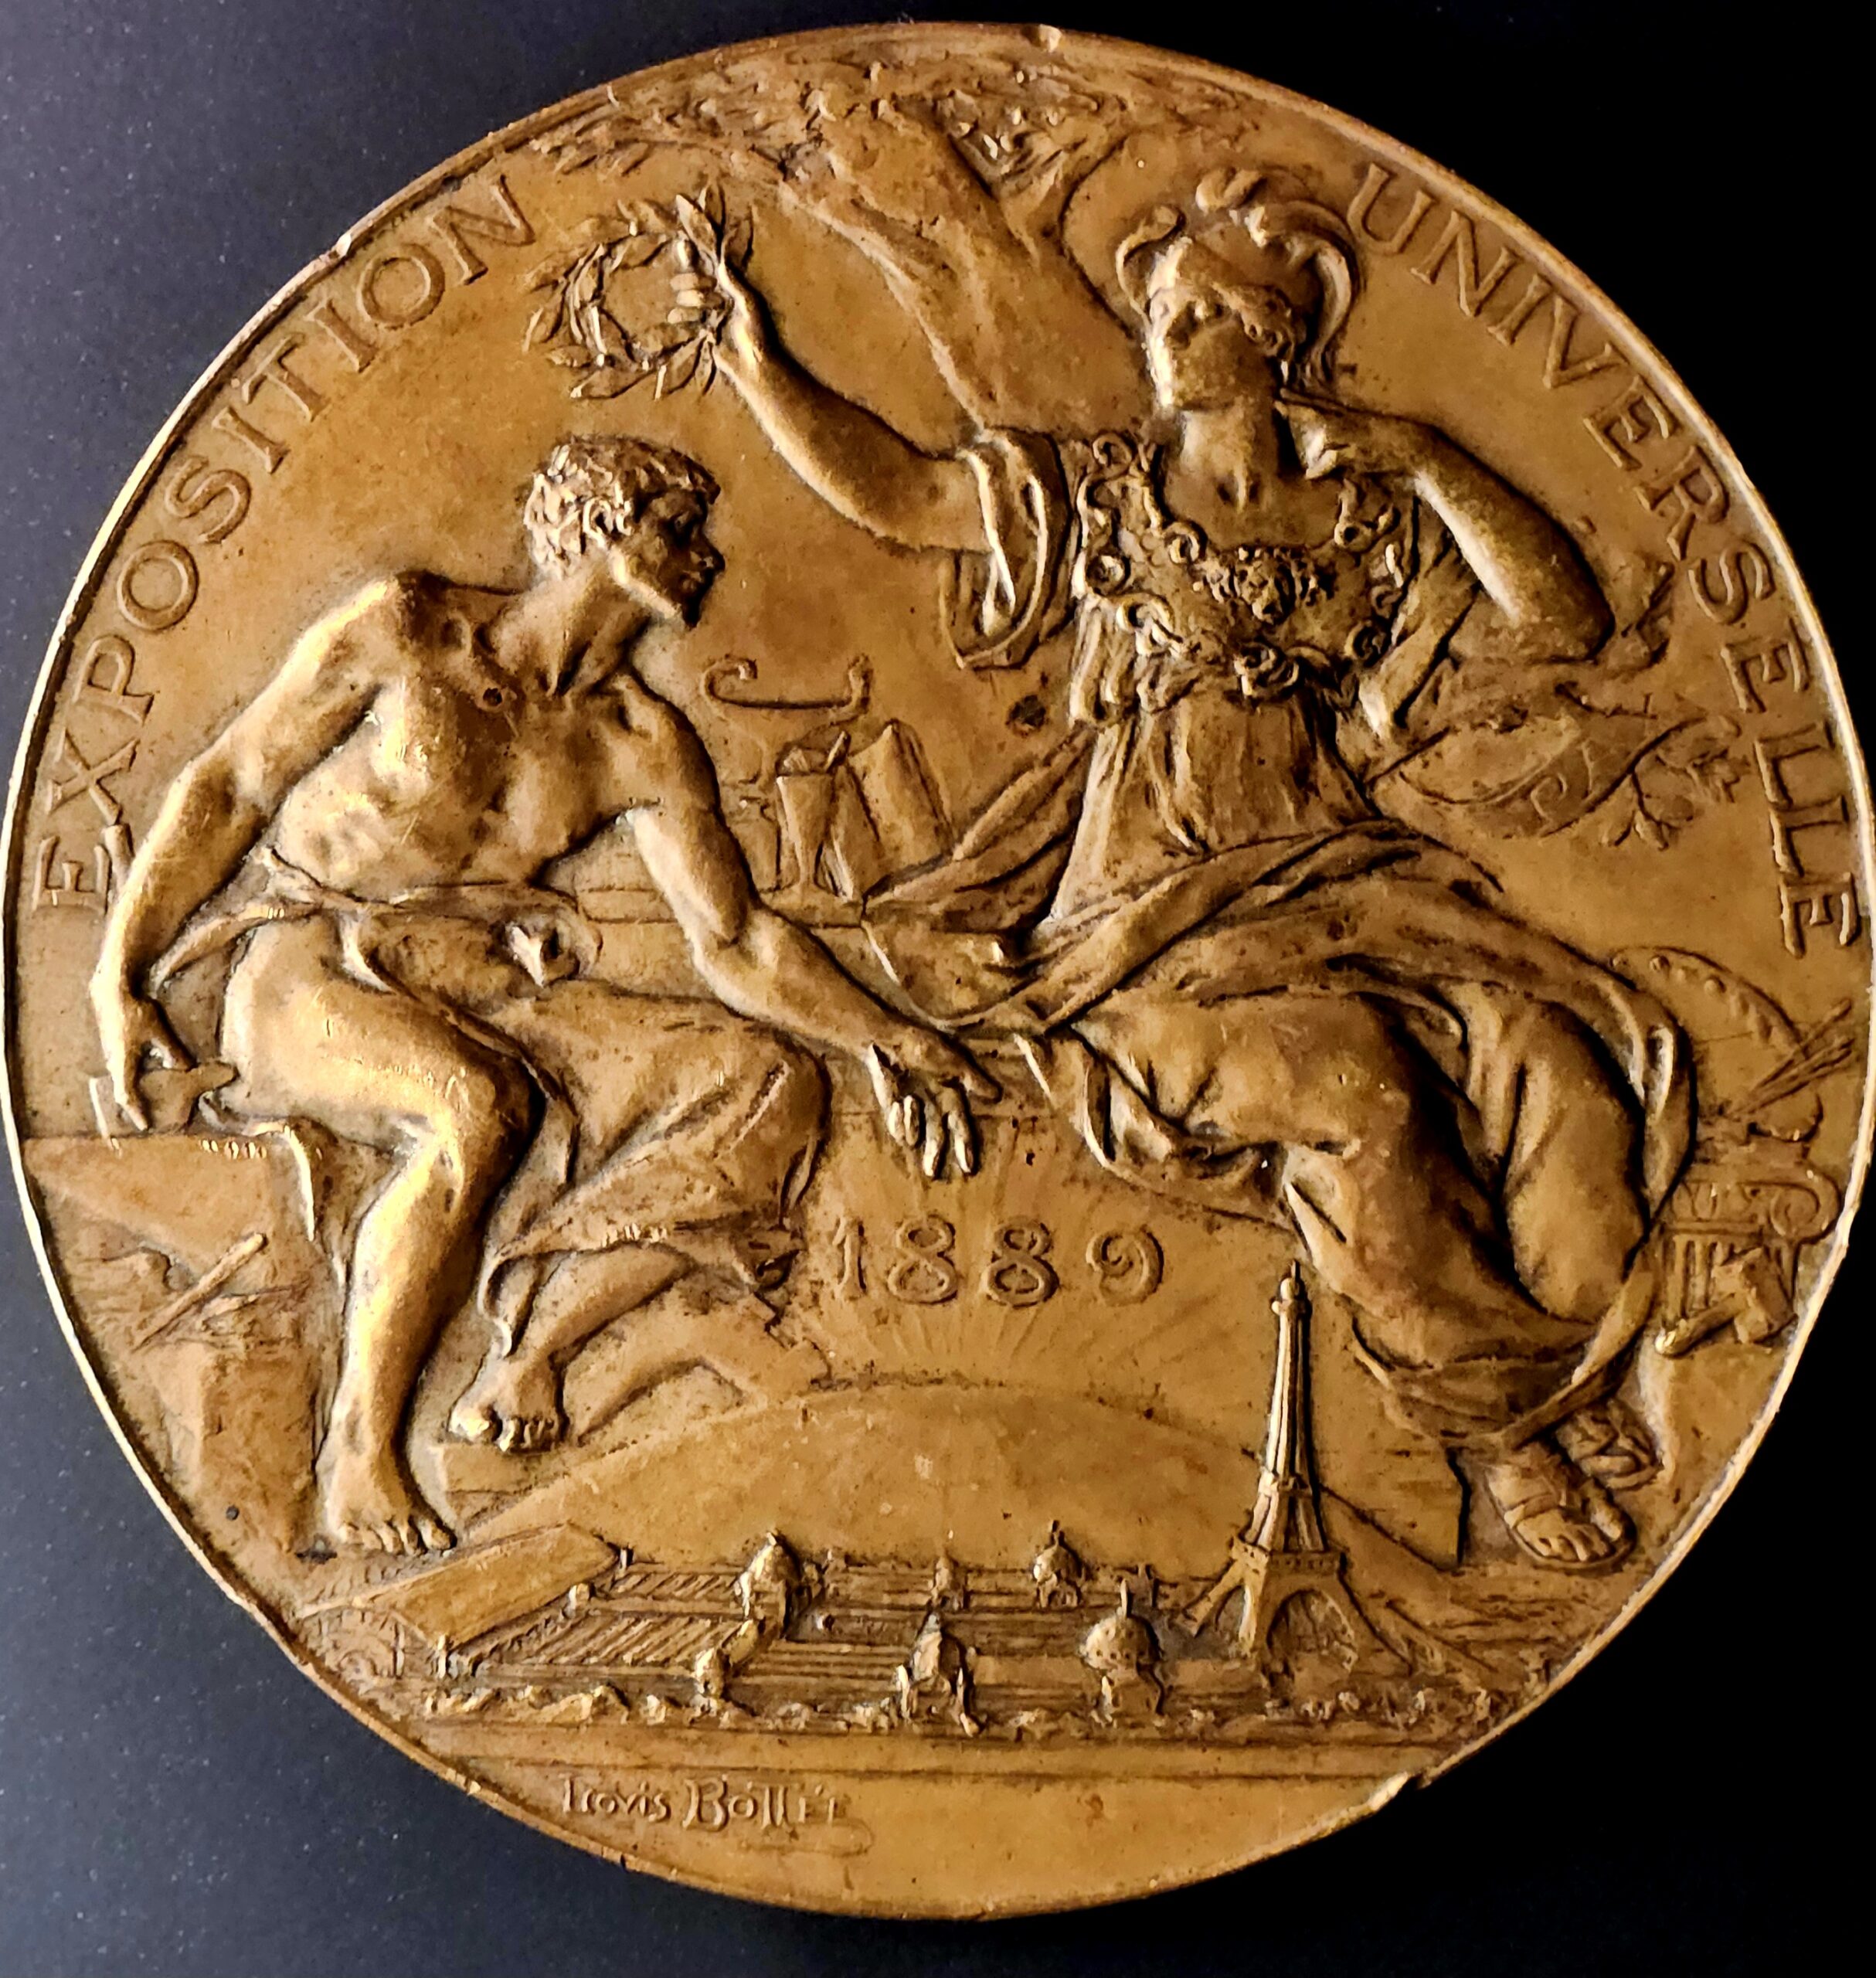 Award Medals of the 1889 Paris World’s Fair & Exposition